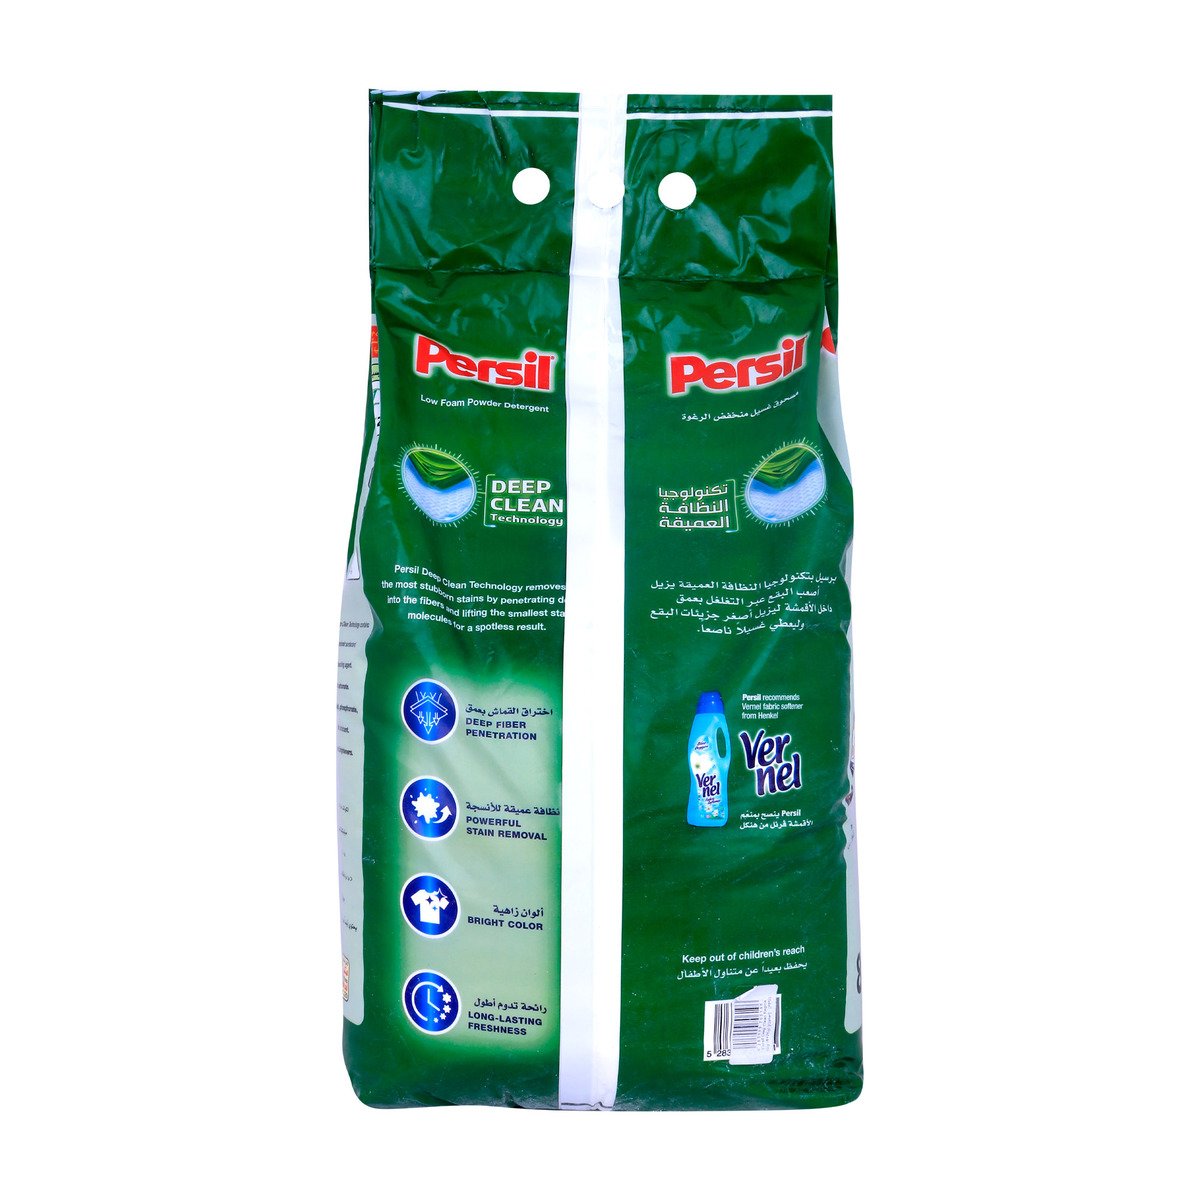 PersilDeep Clean Original Washing Powder  Value Pack 8 kg